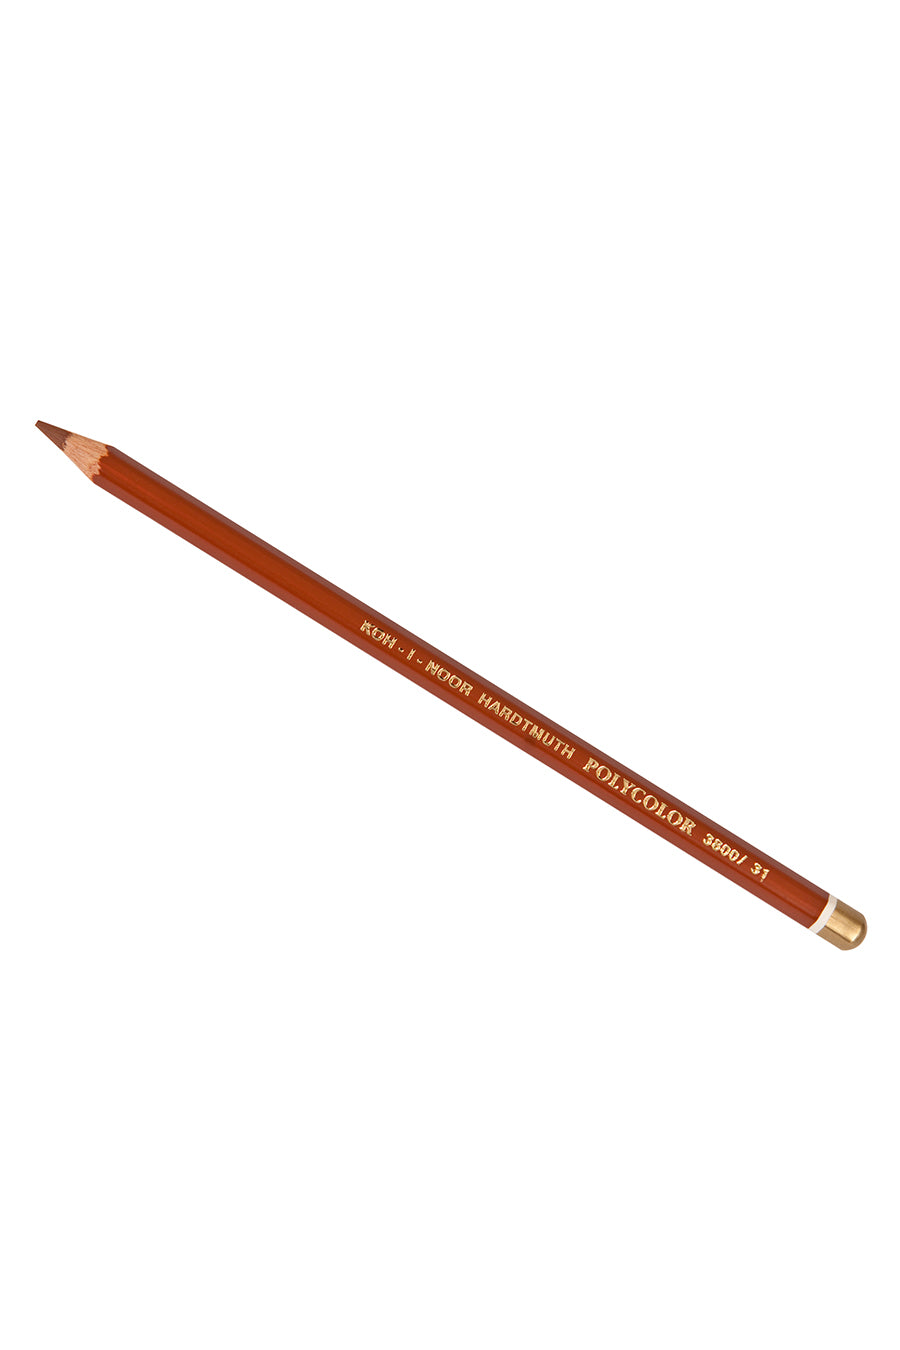 Polycolor® Pencils